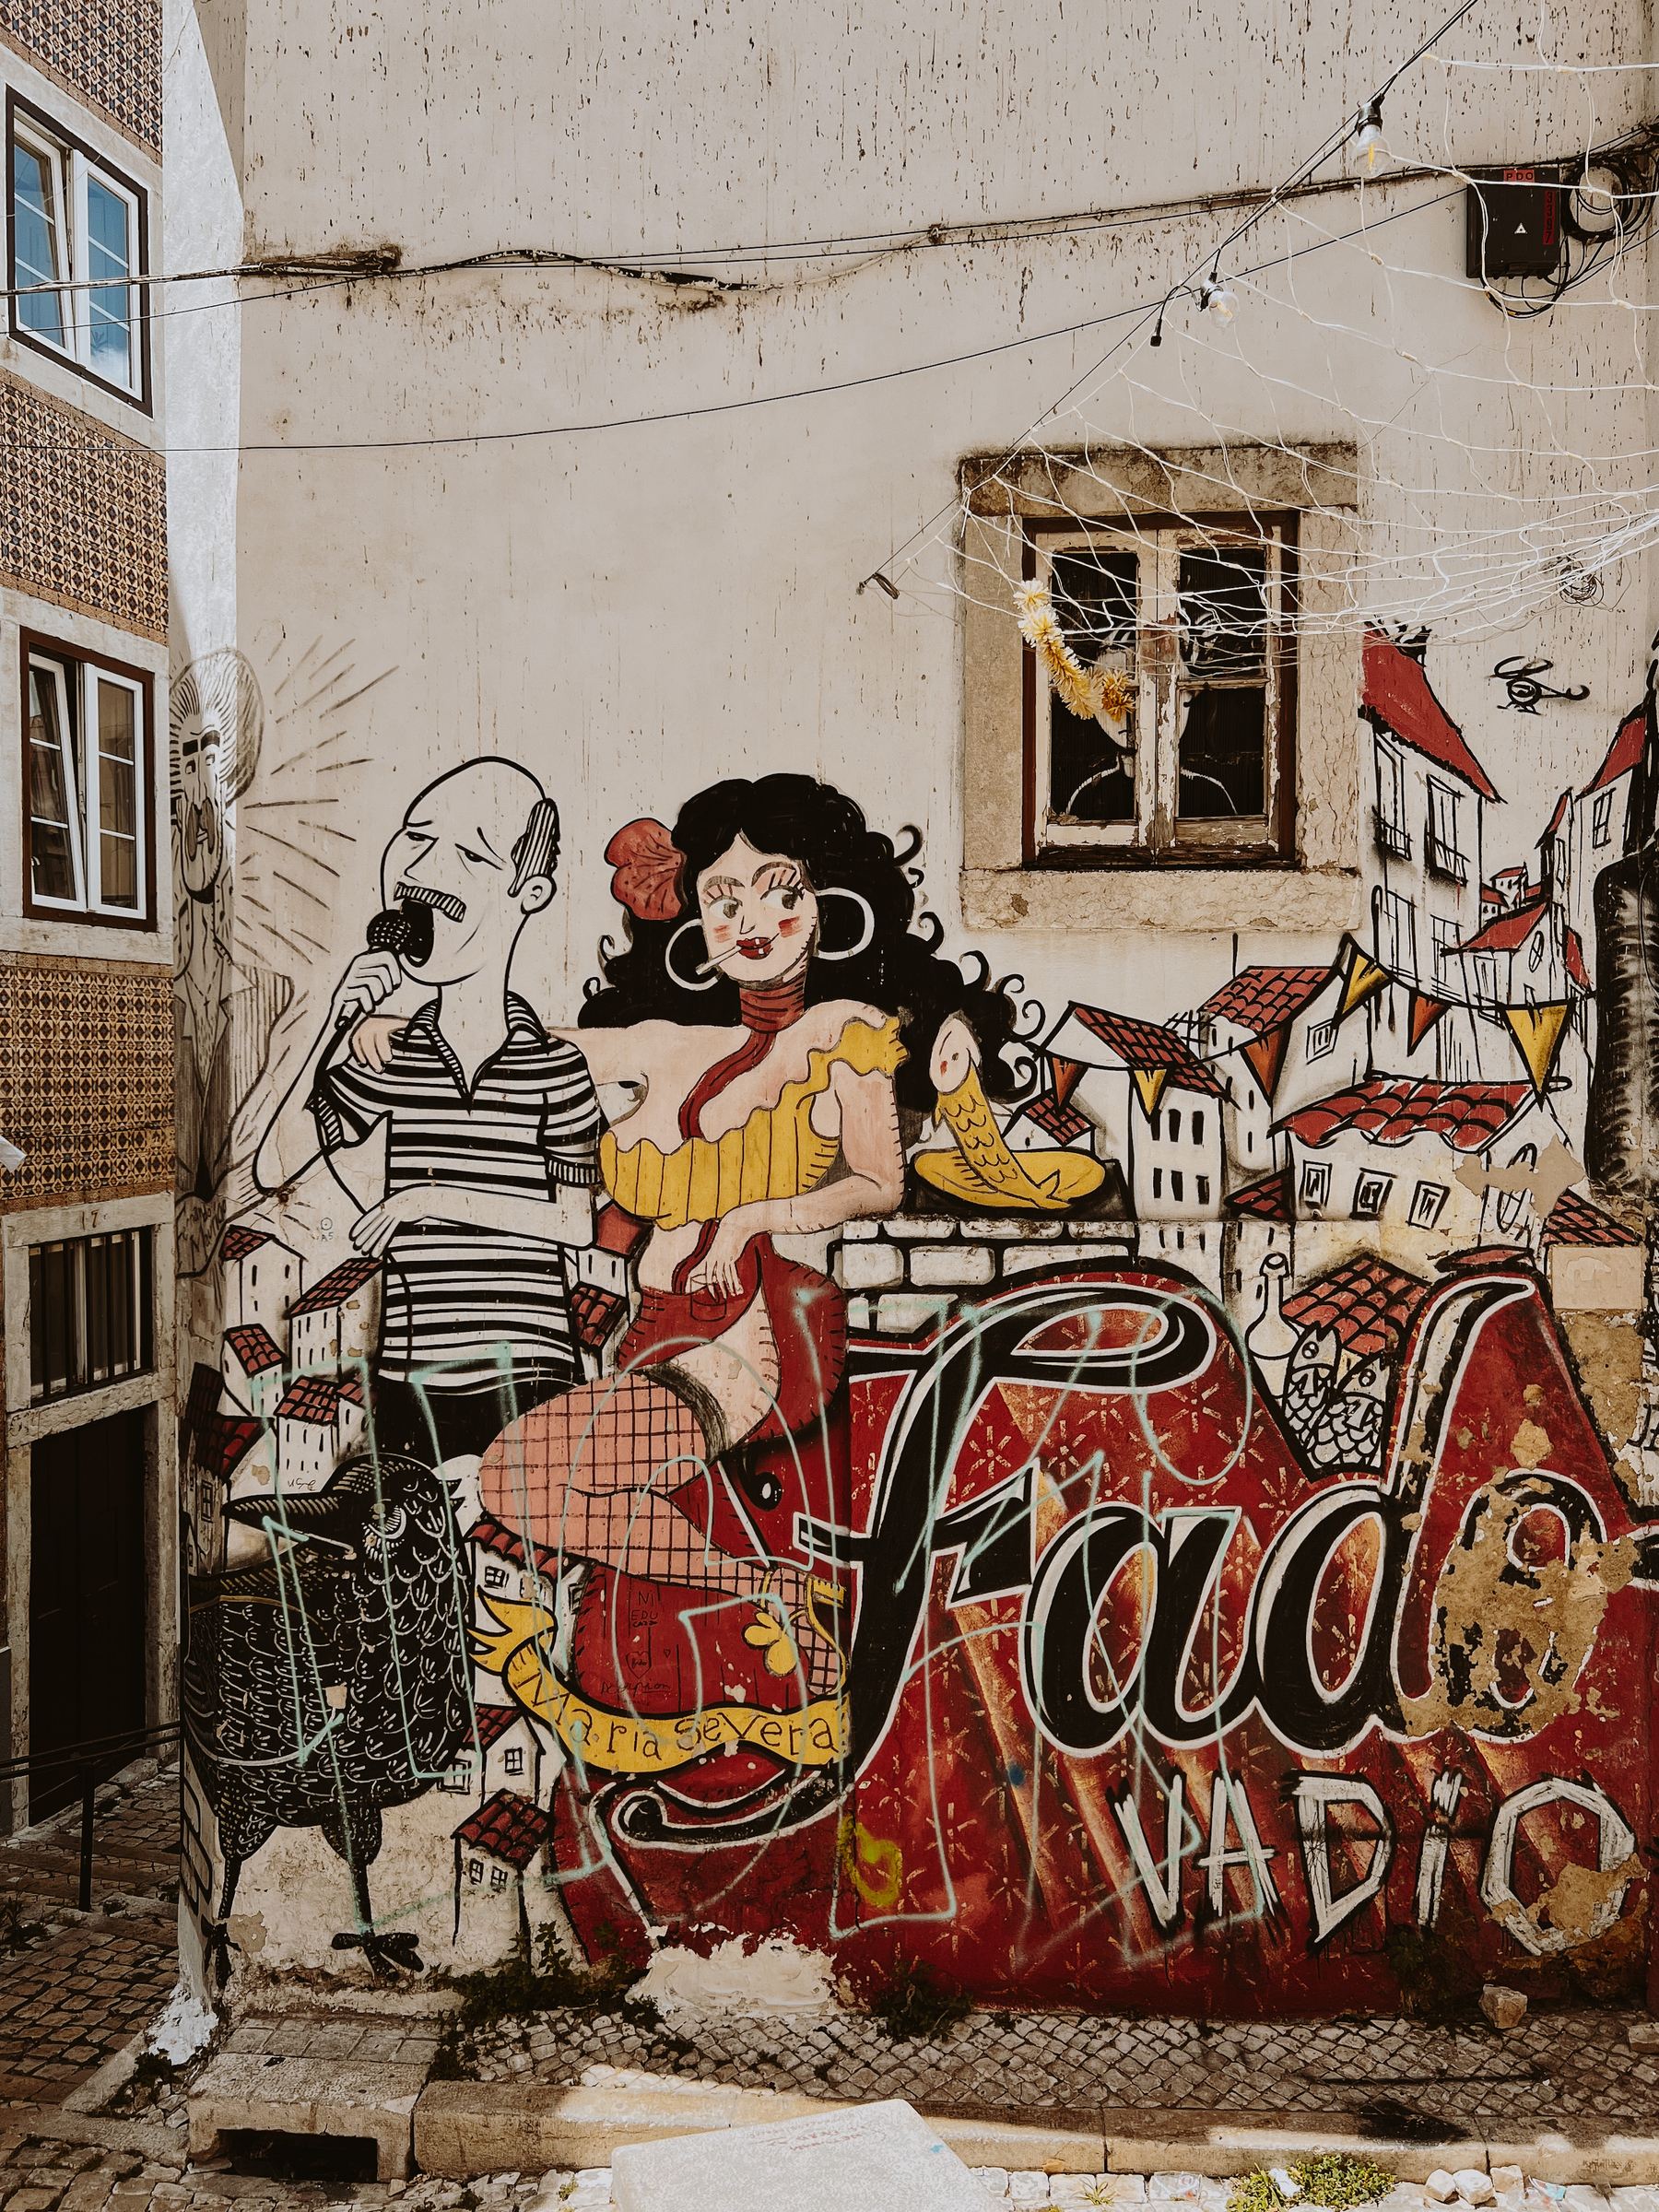 Graffiti on a building. A man, a woman, the words “Fado Vadio”. 